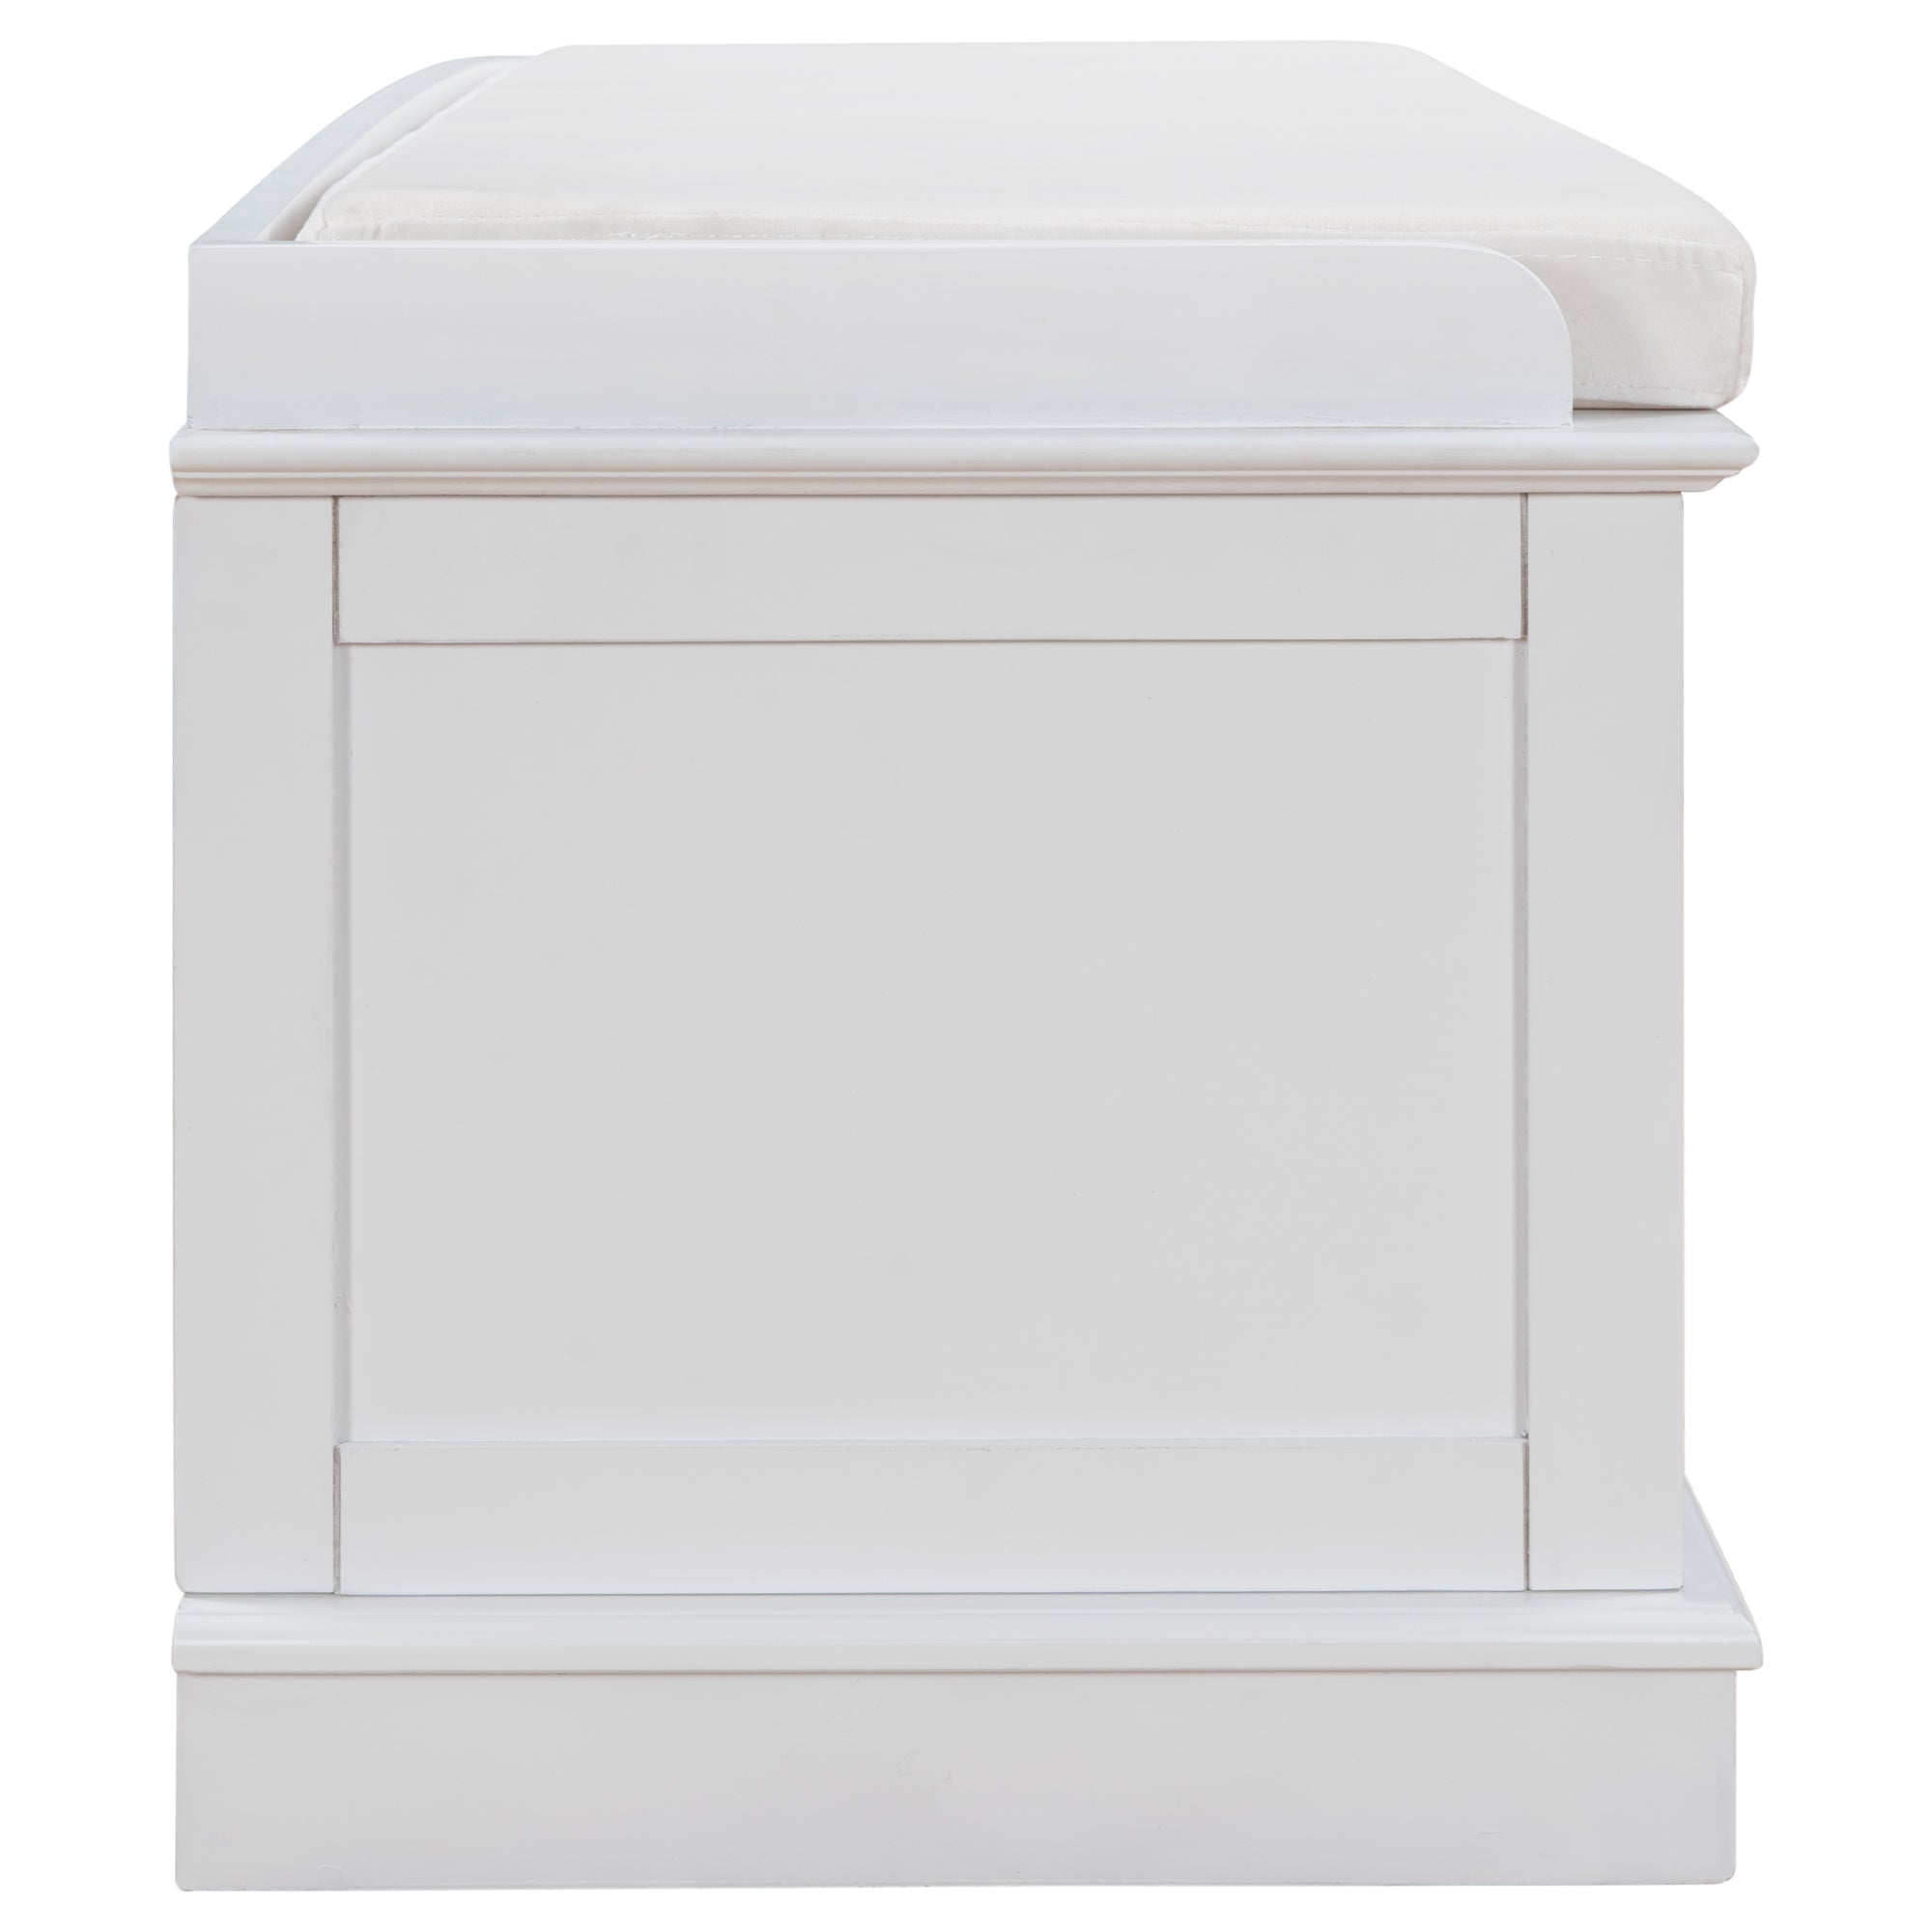 TREXM Storage Bench with Adjustable Shelves (White)